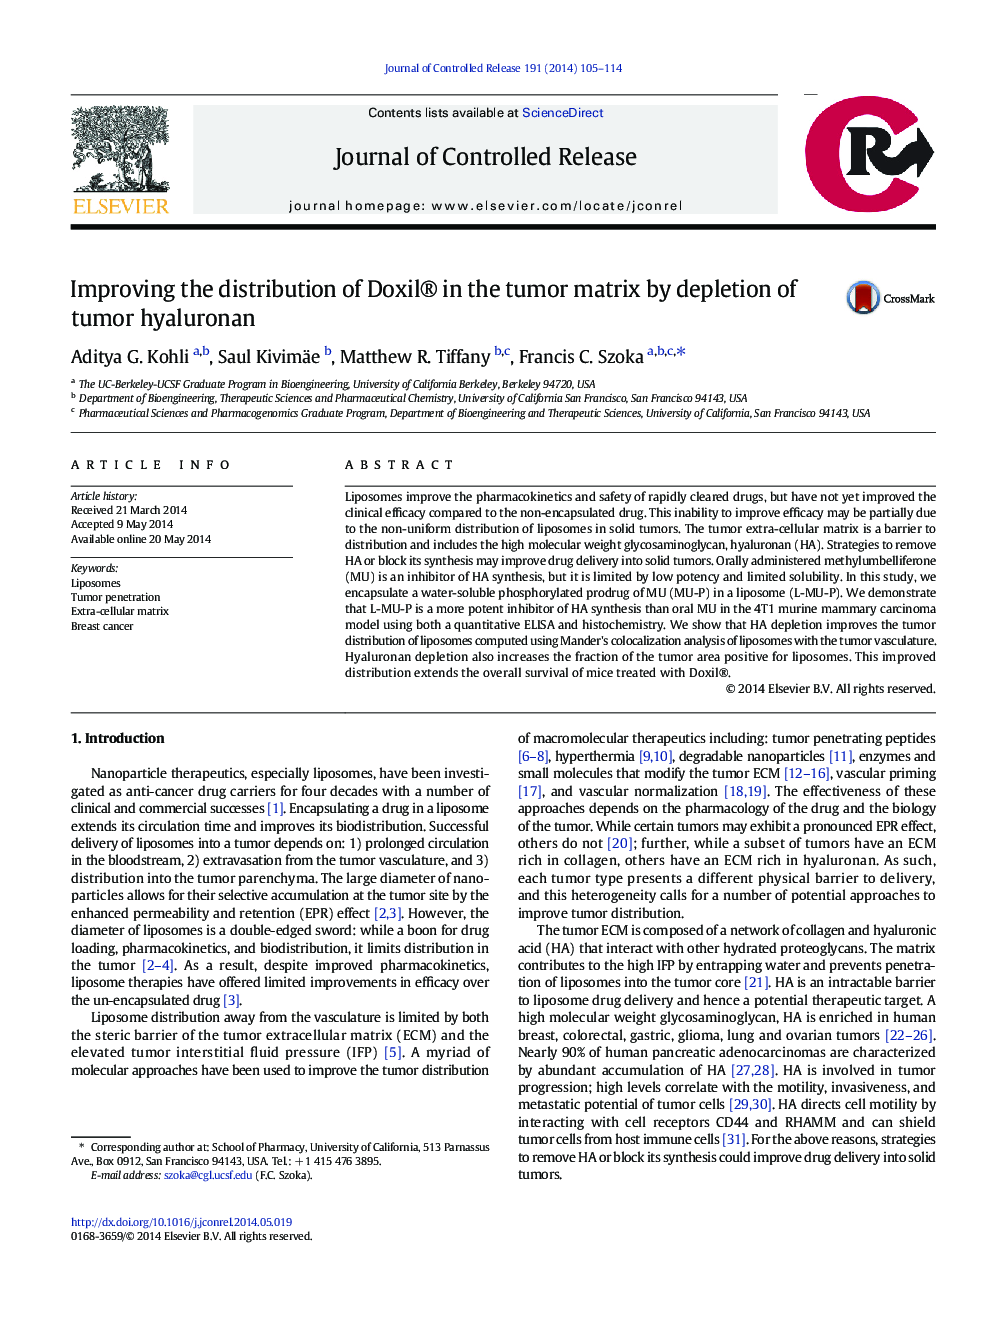 Improving the distribution of Doxil® in the tumor matrix by depletion of tumor hyaluronan